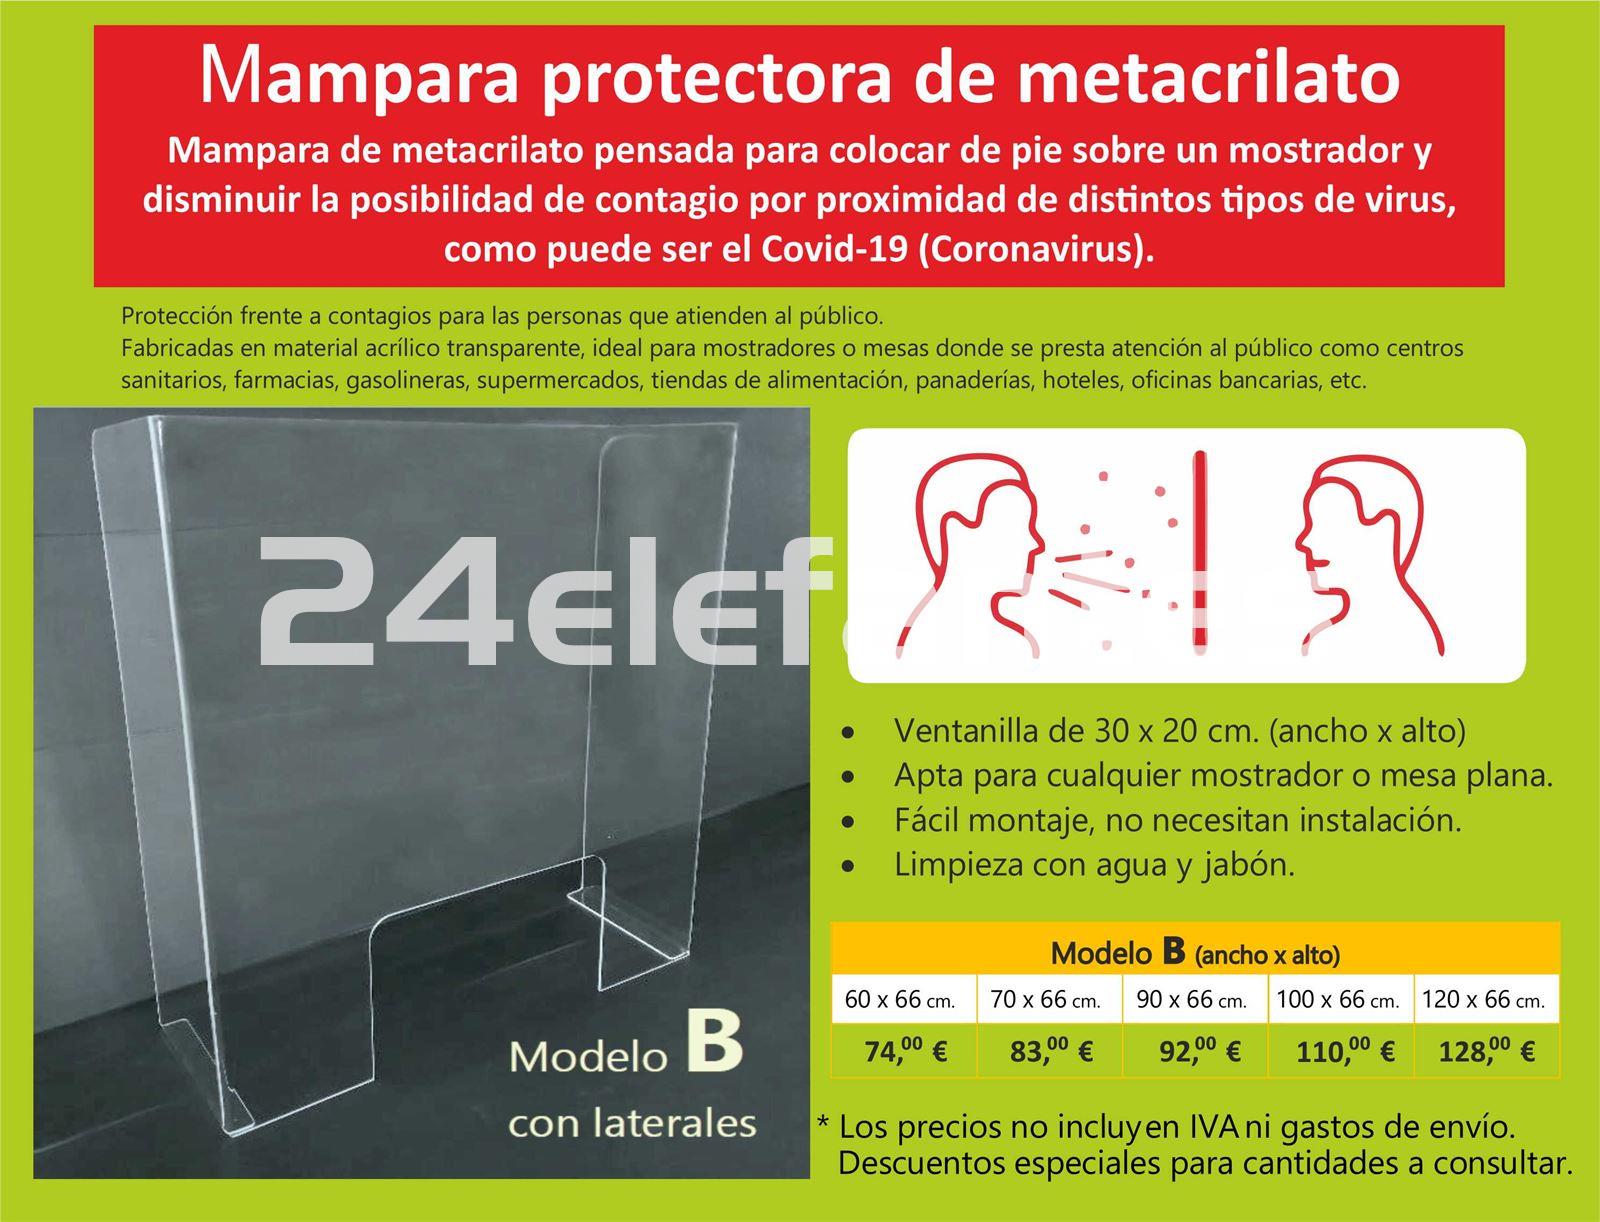 MAMPARA PROTECCIÓN ANTICONTAGIO, MODELO B - Imagen 1